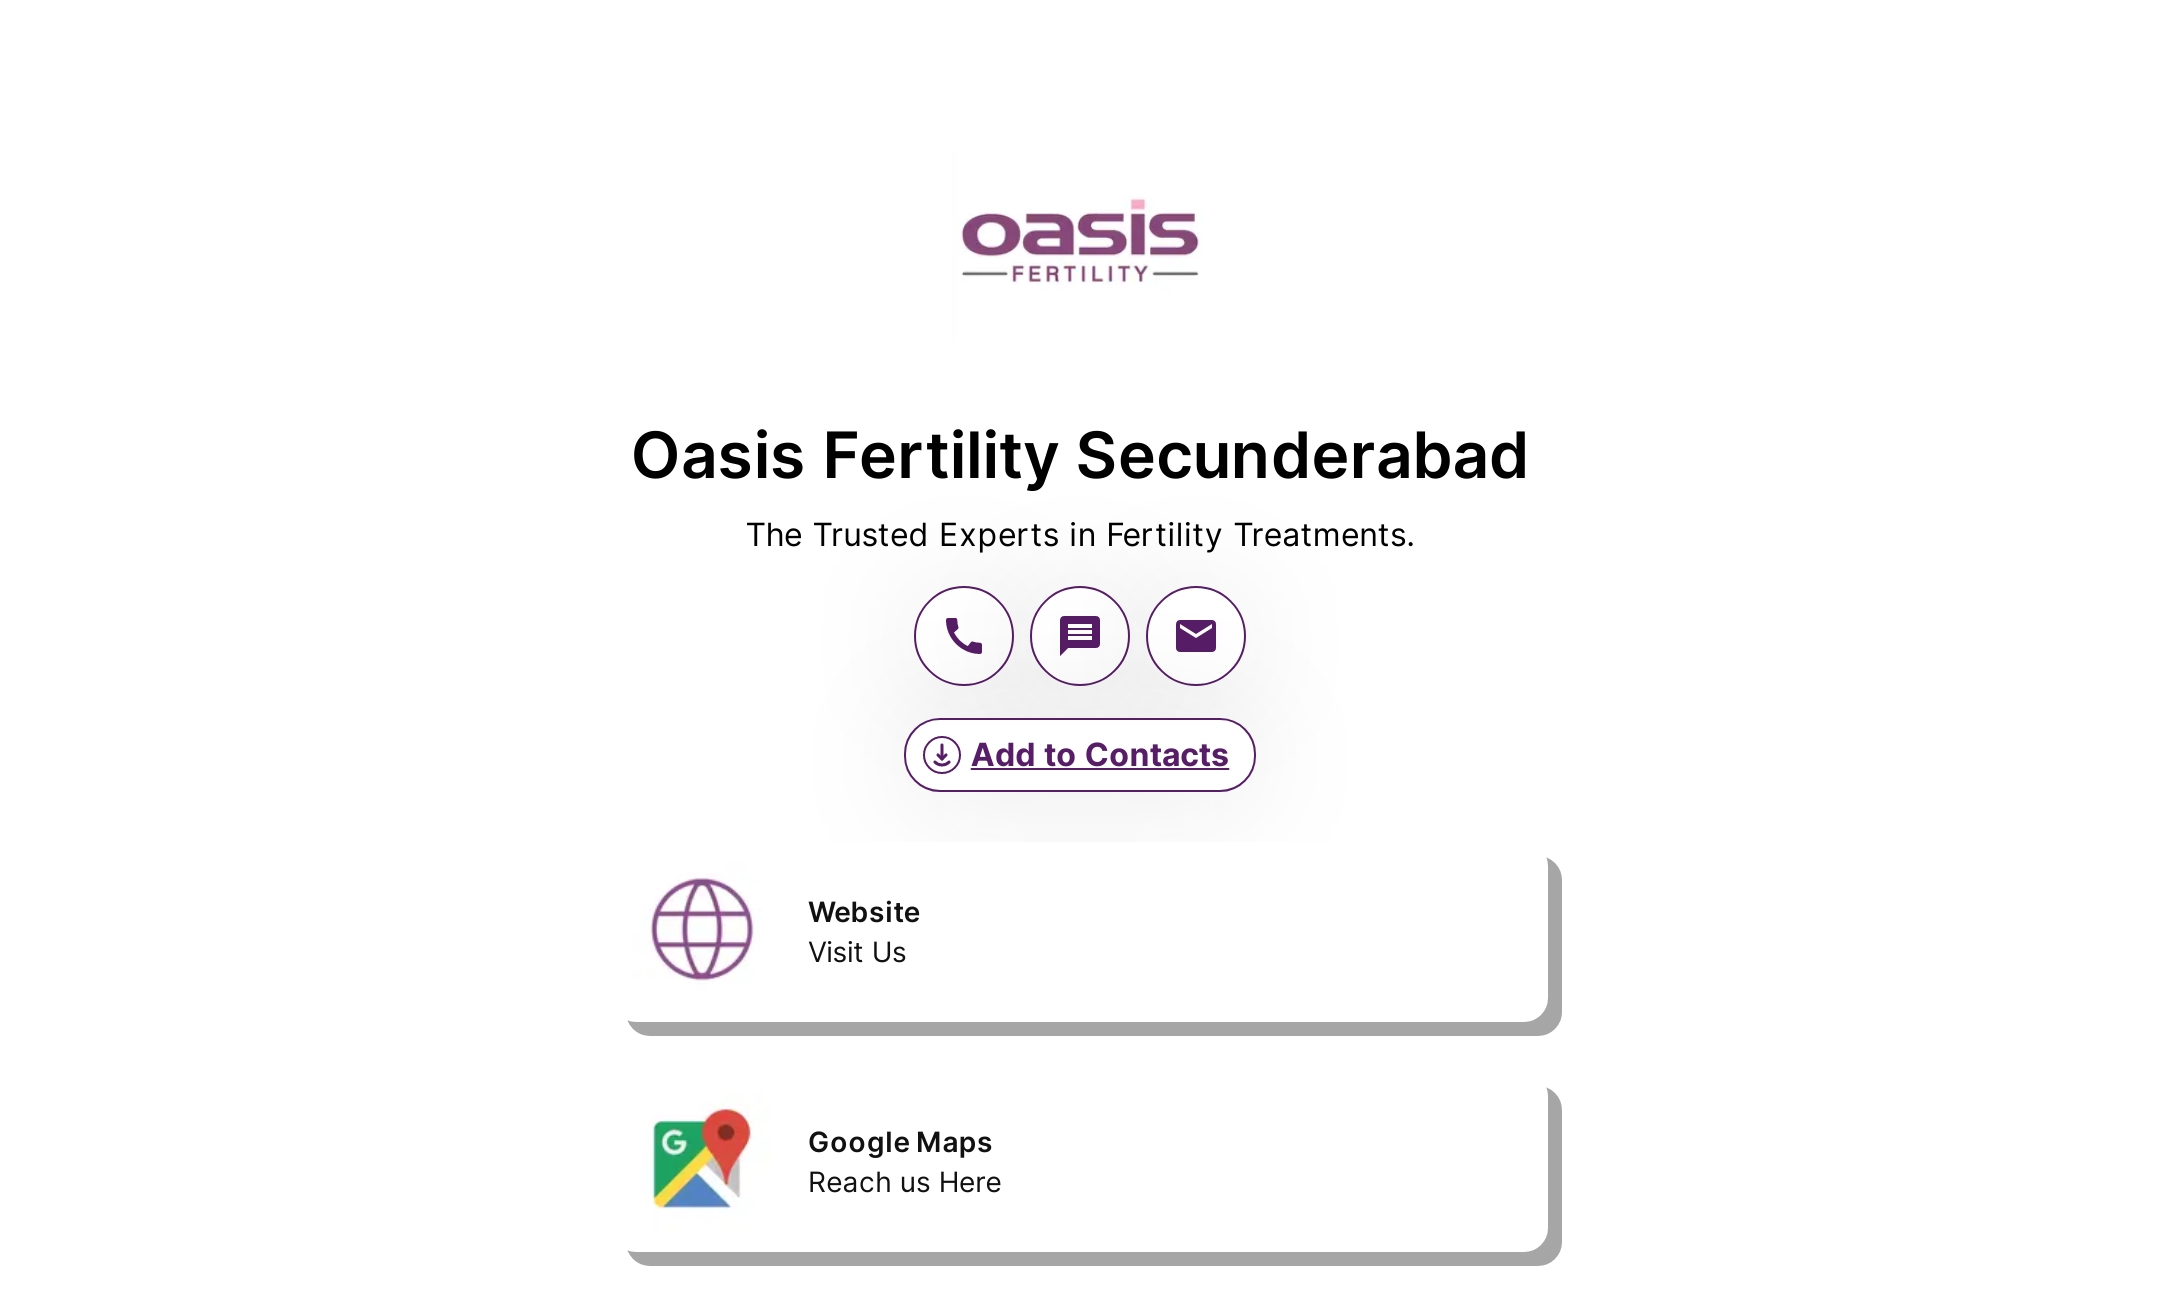 Oasis Fertility Secunderabads Flowpage 5569